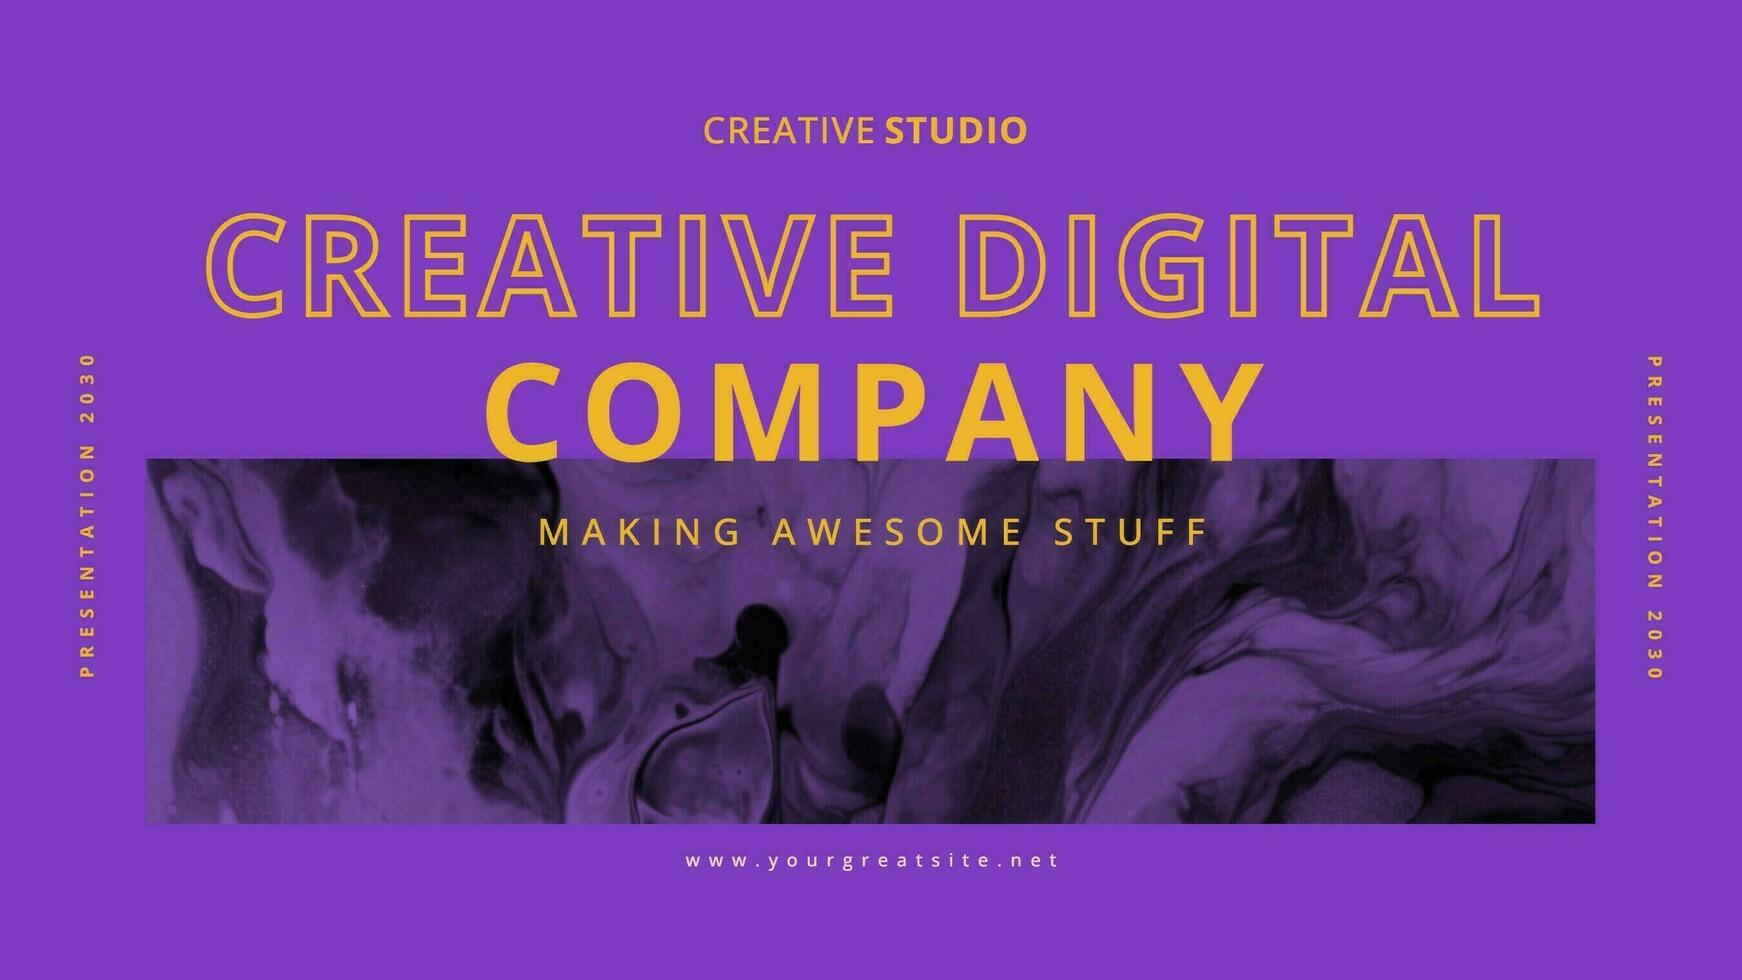 creative digital agency marketing presentation template design ideas